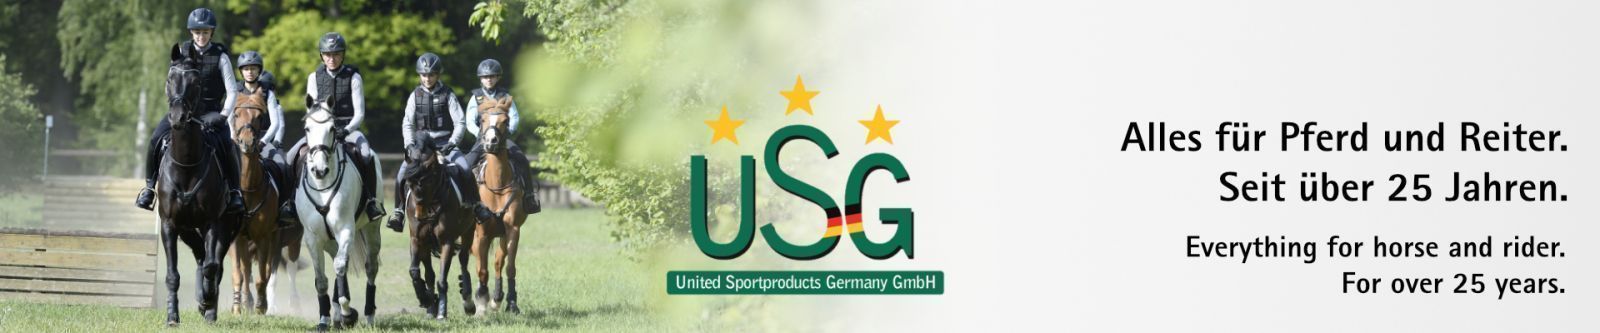 Videos - USG - United Sportproducts Germany GmbH